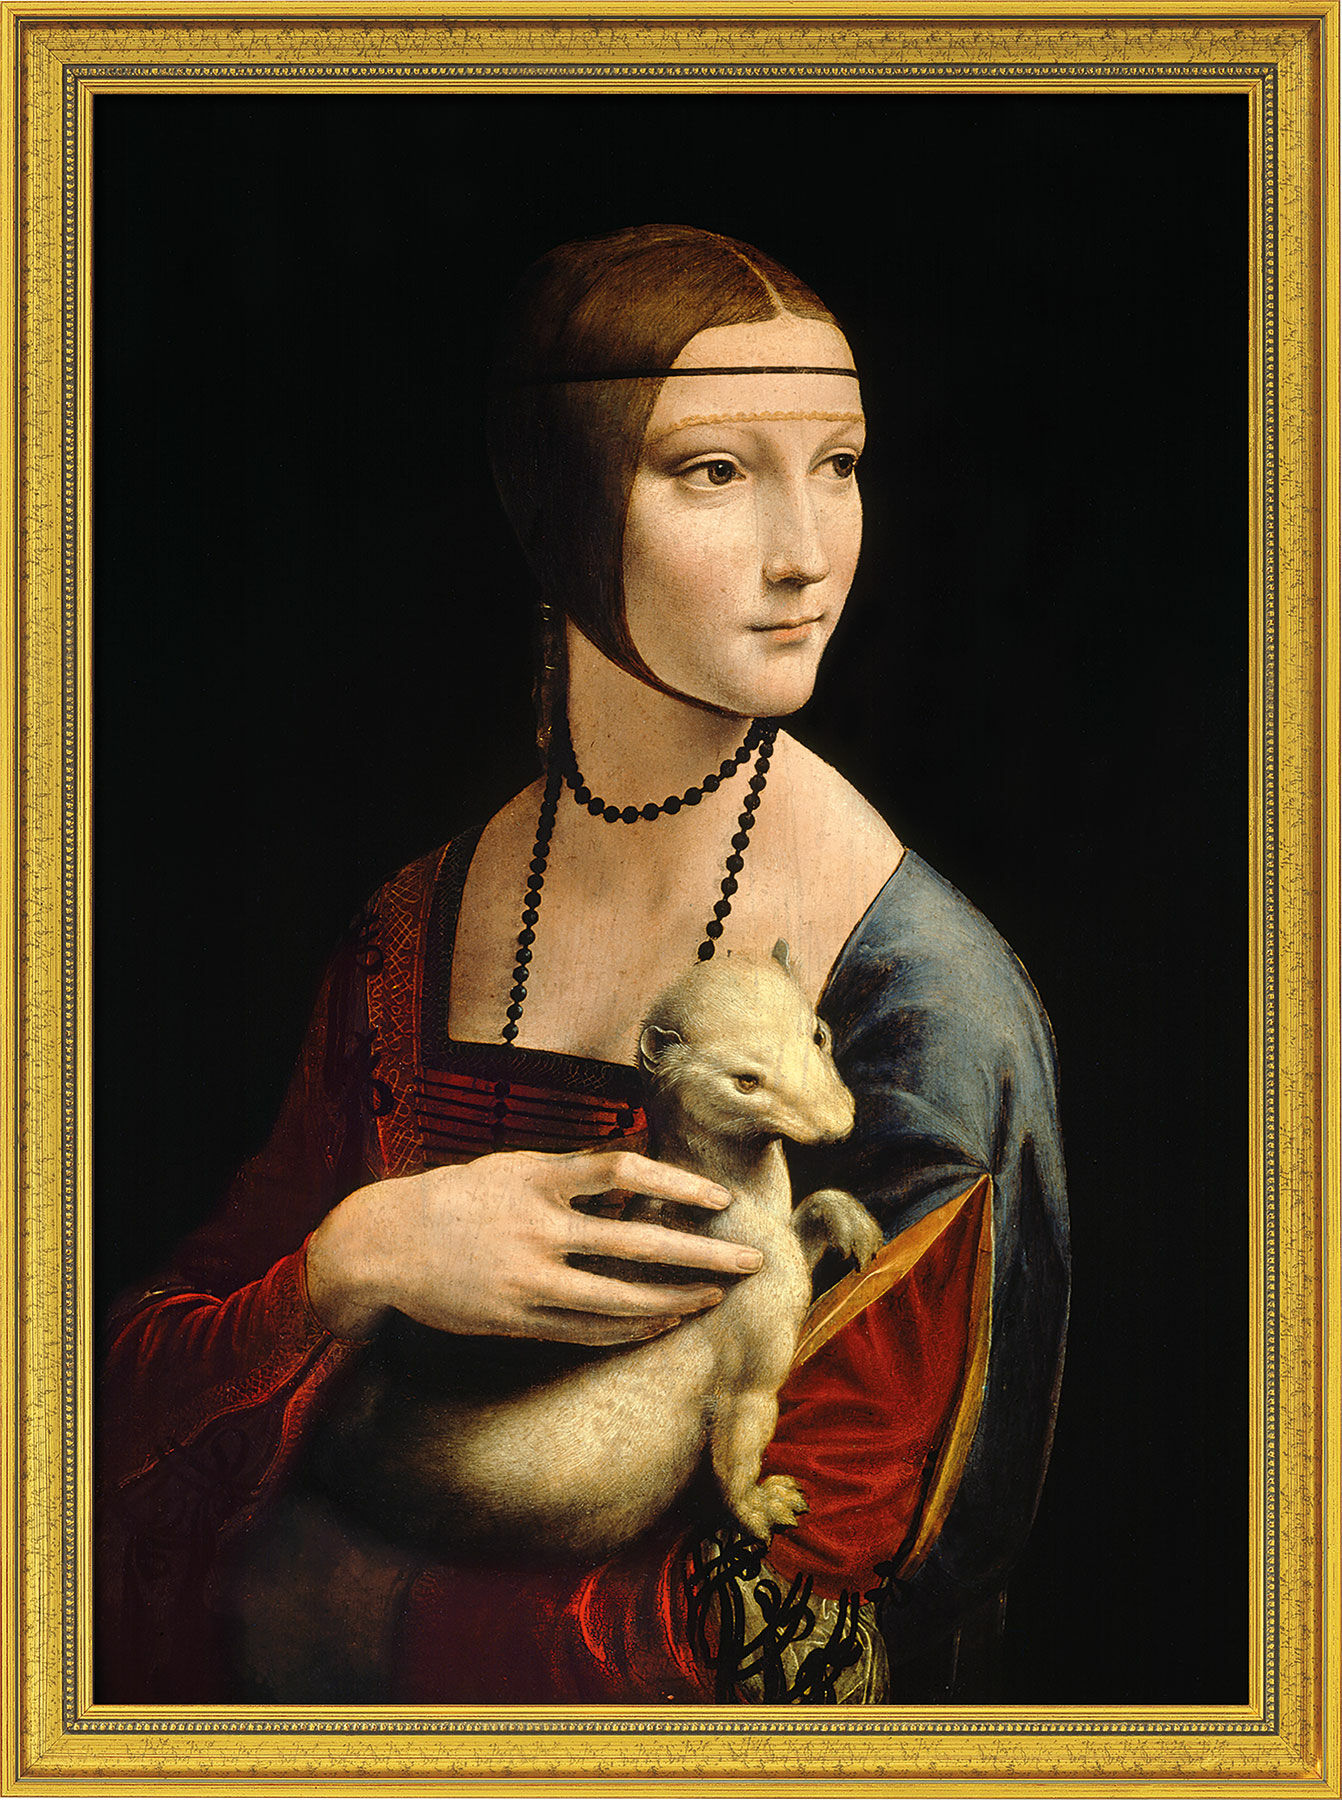 Picture "Lady with an Ermine" (1488-90), framed by Leonardo da Vinci